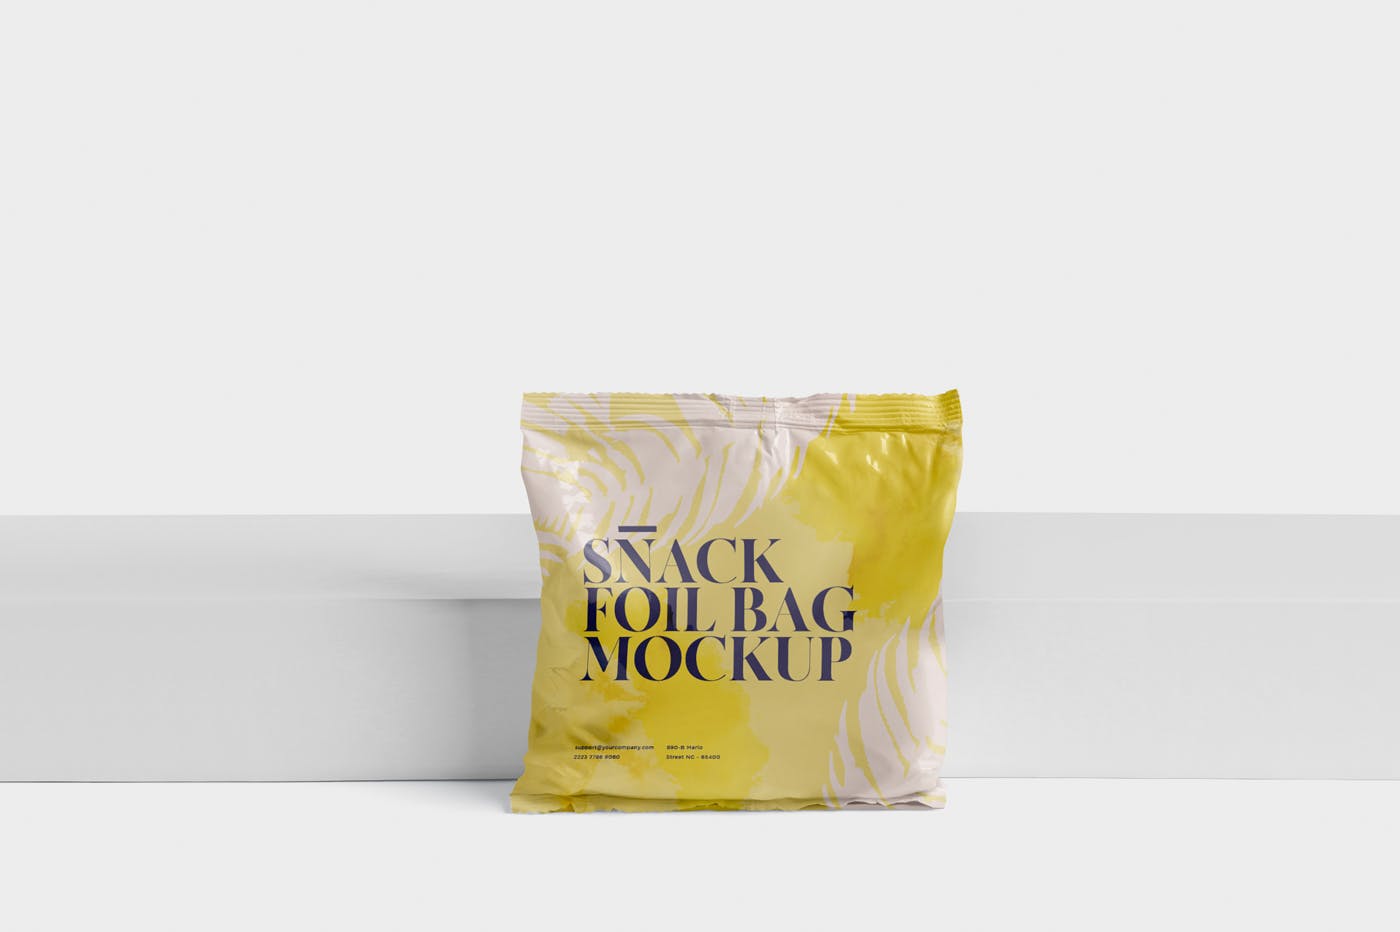 小吃零食铝箔包装袋设计图蚂蚁素材精选 Snack Foil Bag Mockup – Square Size – Small插图(3)